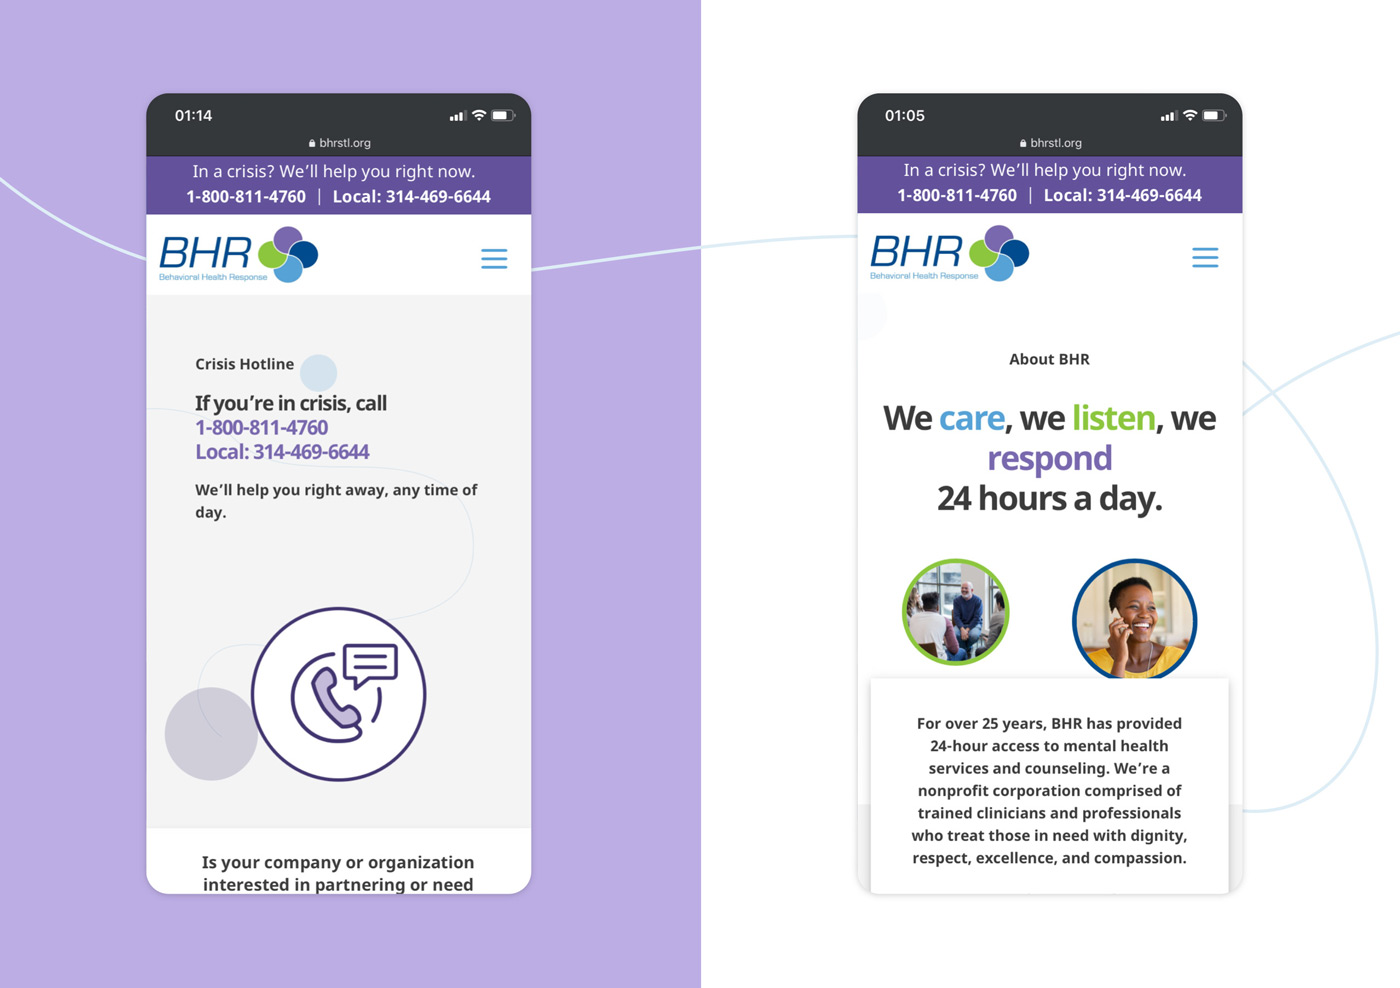 Behavioral Health Response's website design on mobile